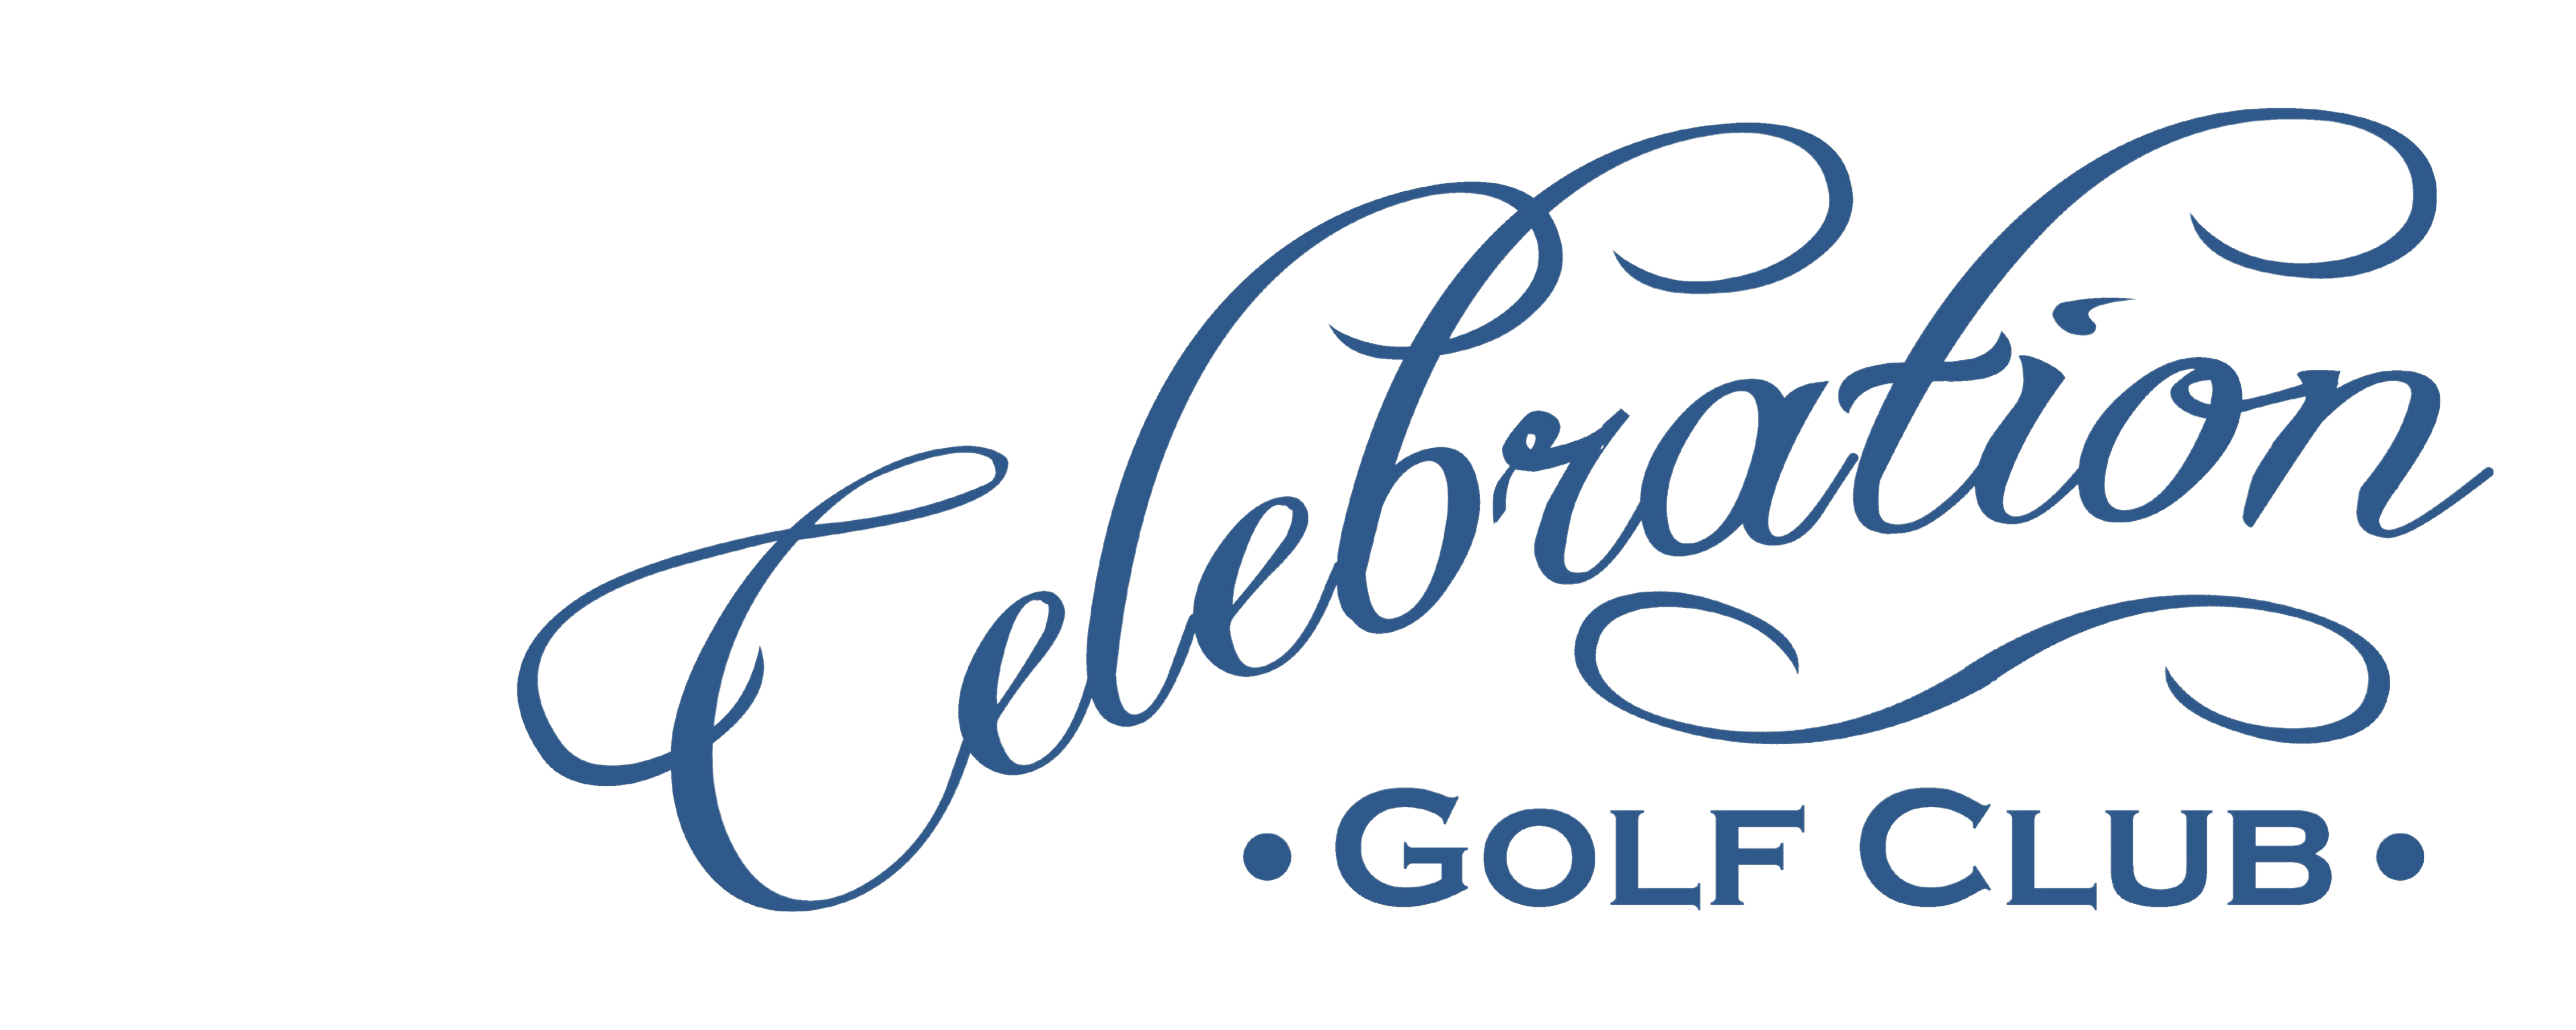 Home - Celebration Golf Club